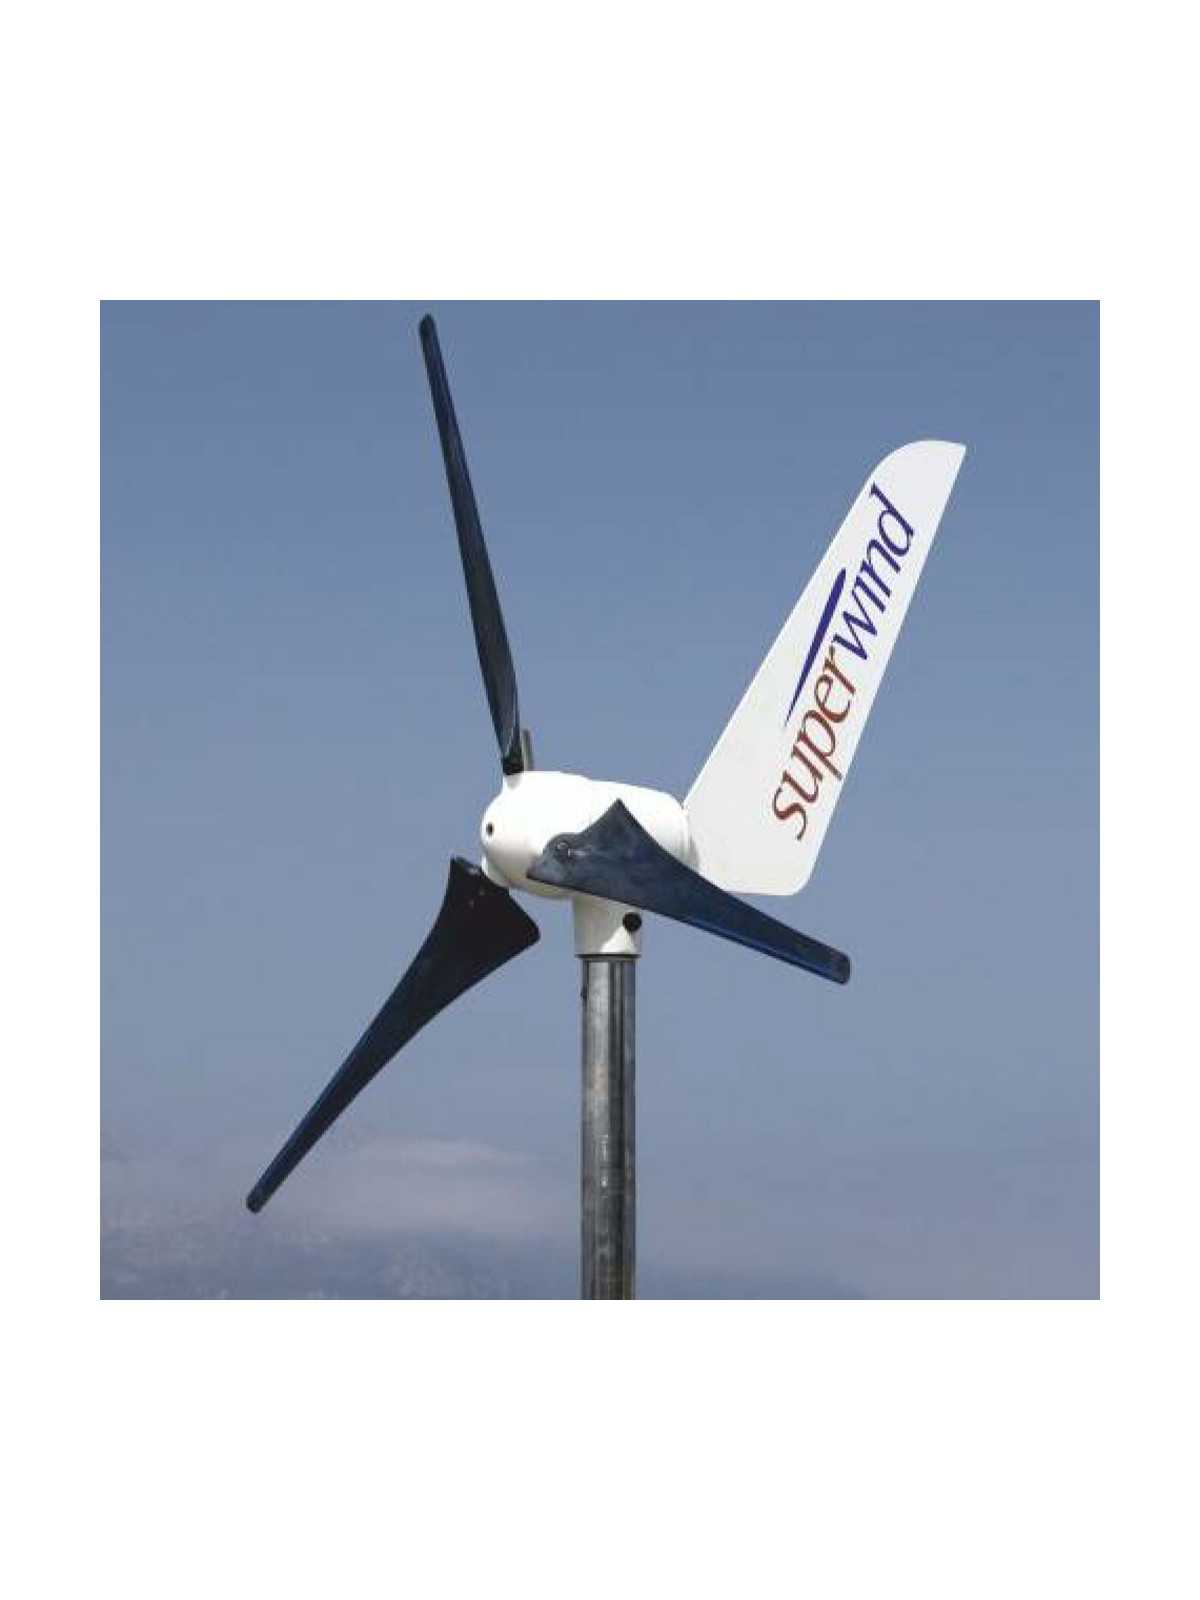 https://www.wattuneed.com/8201-product_zoom/350w-wind-turbine-superwind-12v.jpg